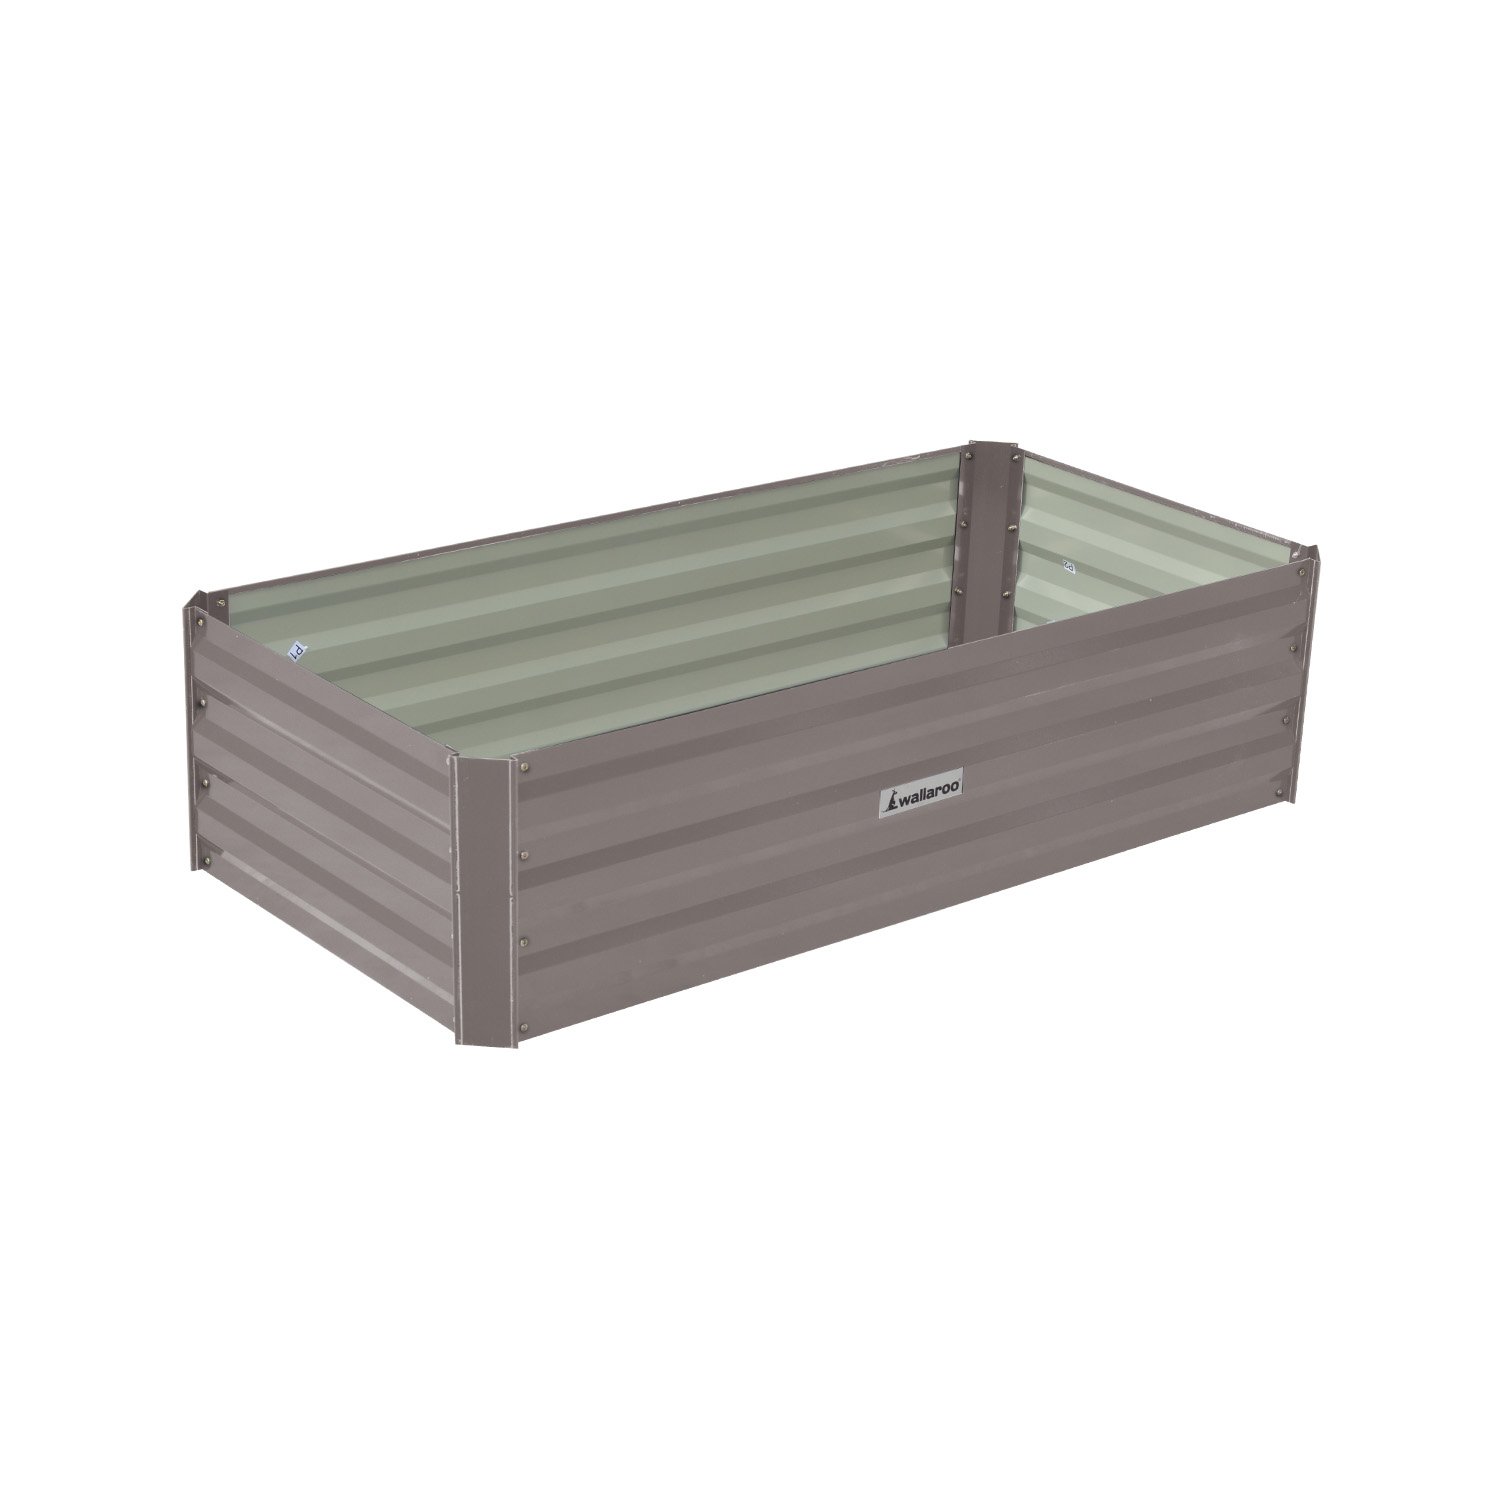 Wallaroo Garden Bed 120 x 60 x 30cm Galvanized Steel - Grey 2